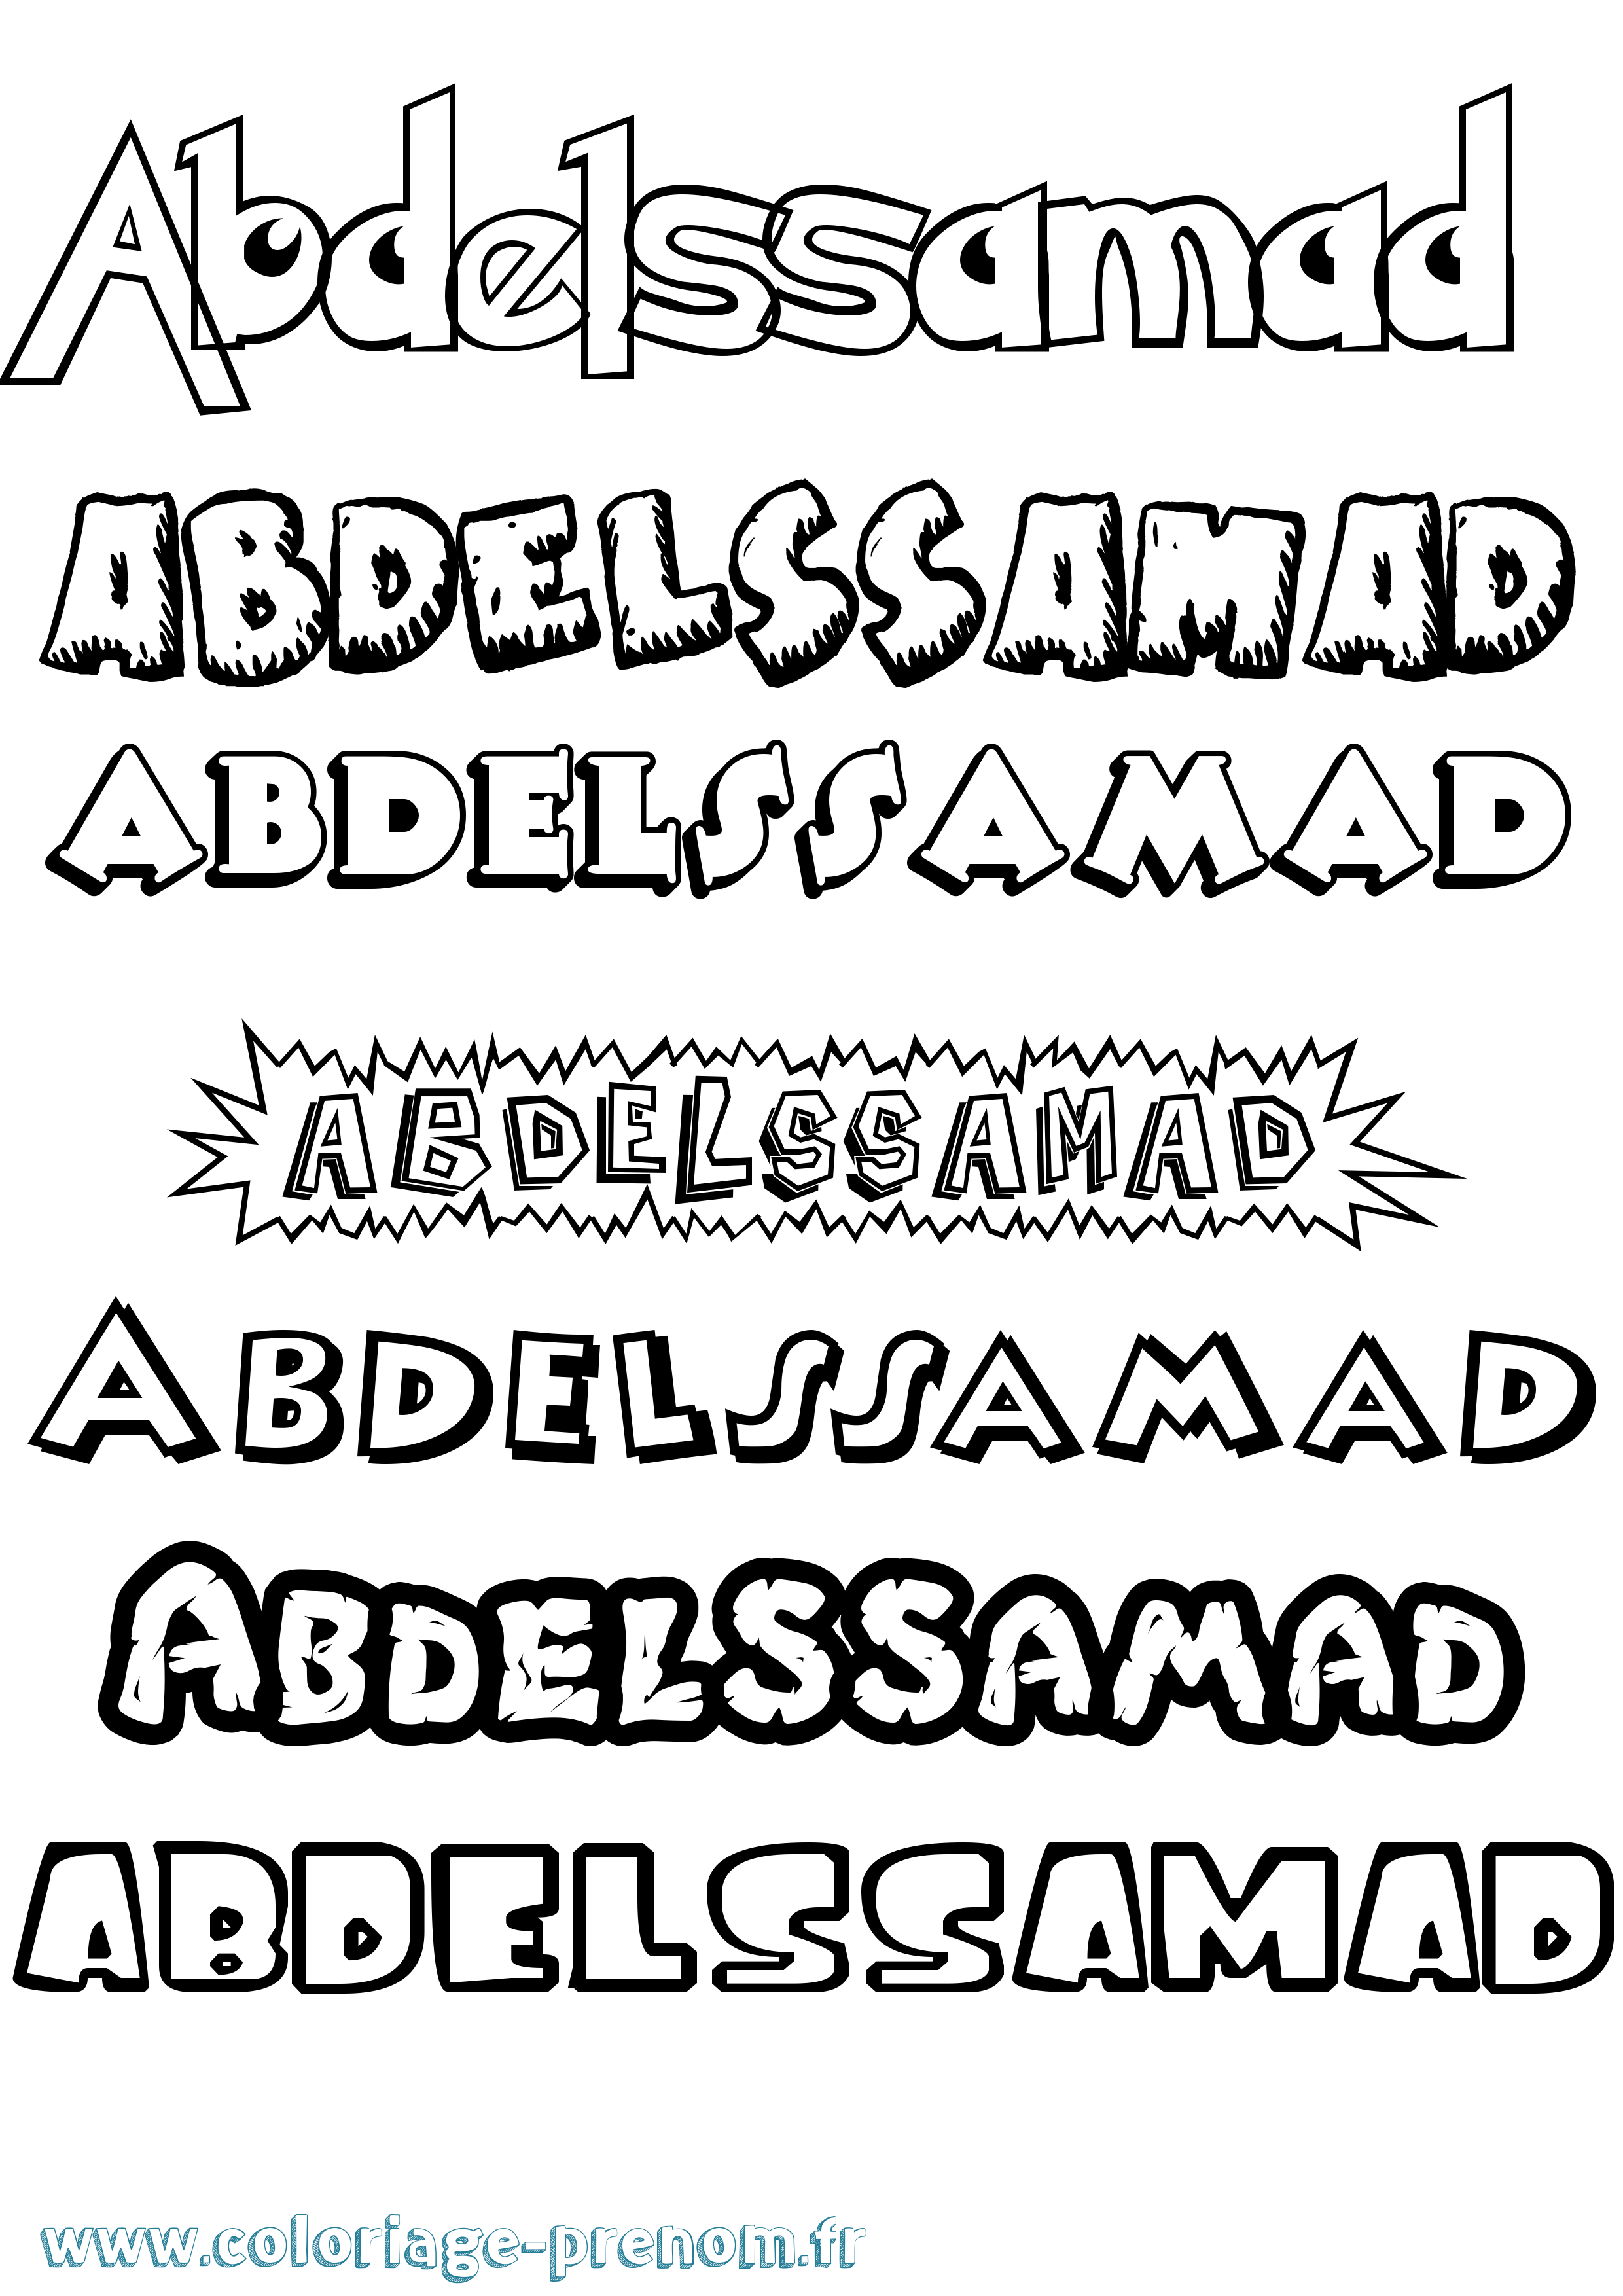 Coloriage prénom Abdelssamad Dessin Animé